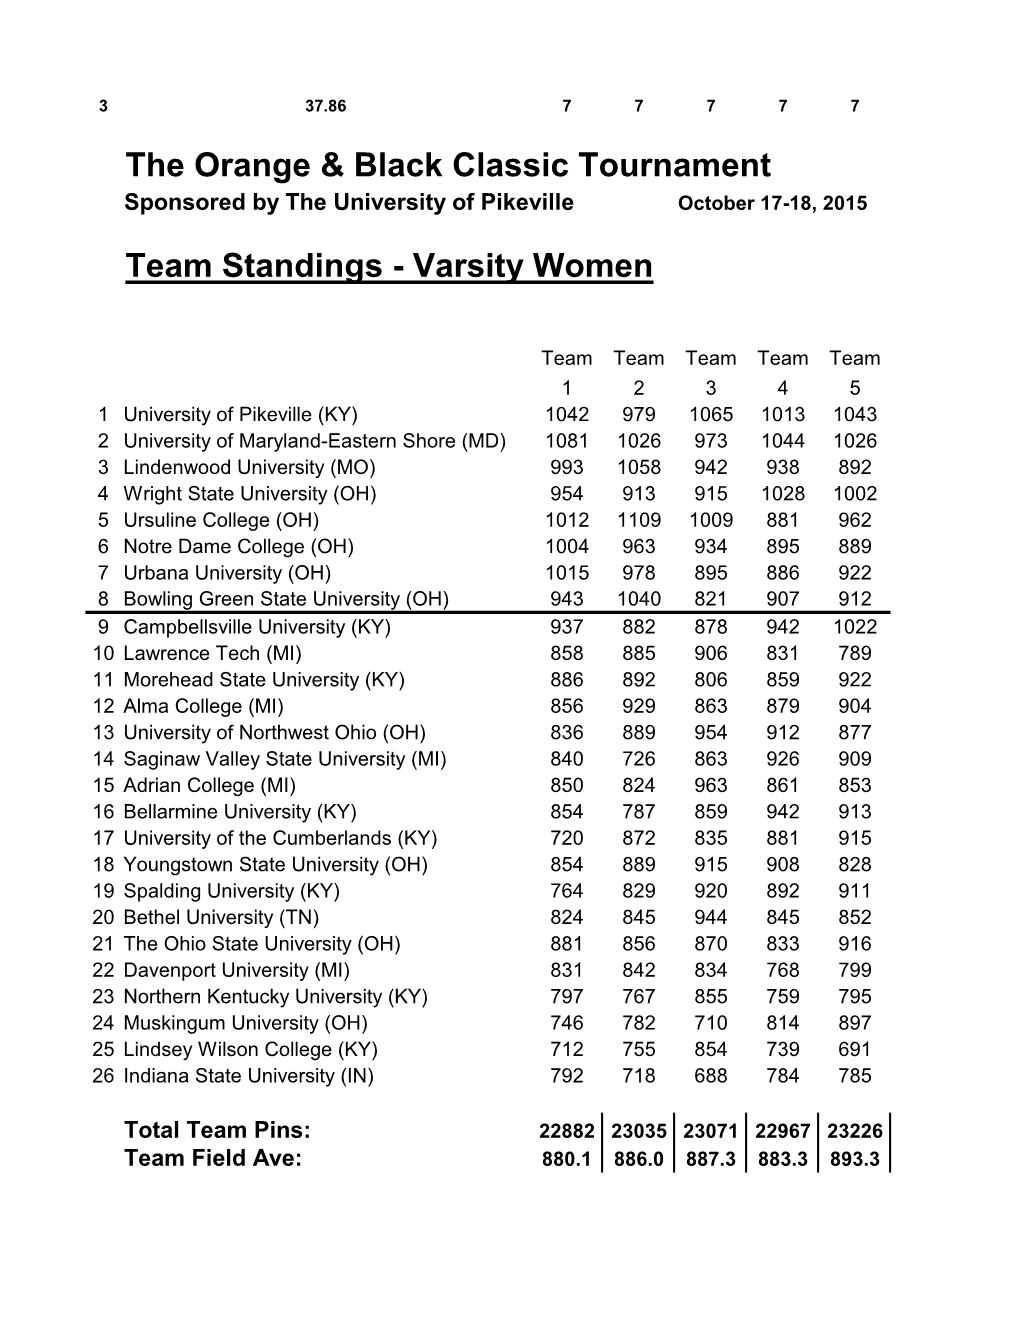 The Orange & Black Classic Tournament Team Standings